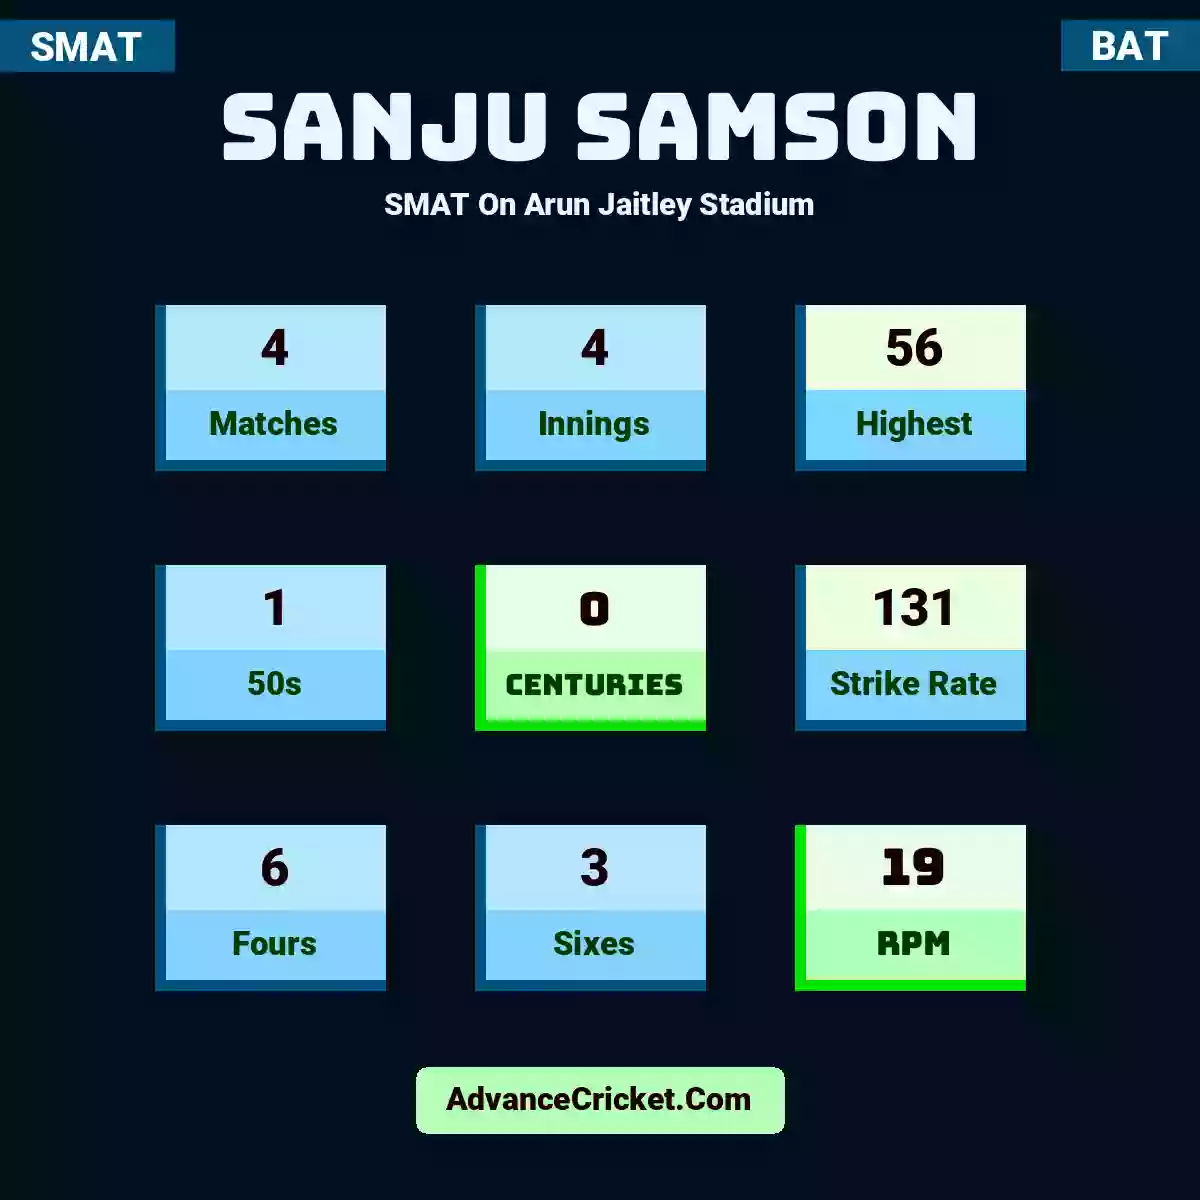 Sanju Samson SMAT  On Arun Jaitley Stadium, Sanju Samson played 4 matches, scored 56 runs as highest, 1 half-centuries, and 0 centuries, with a strike rate of 131. S.Samson hit 6 fours and 3 sixes, with an RPM of 19.